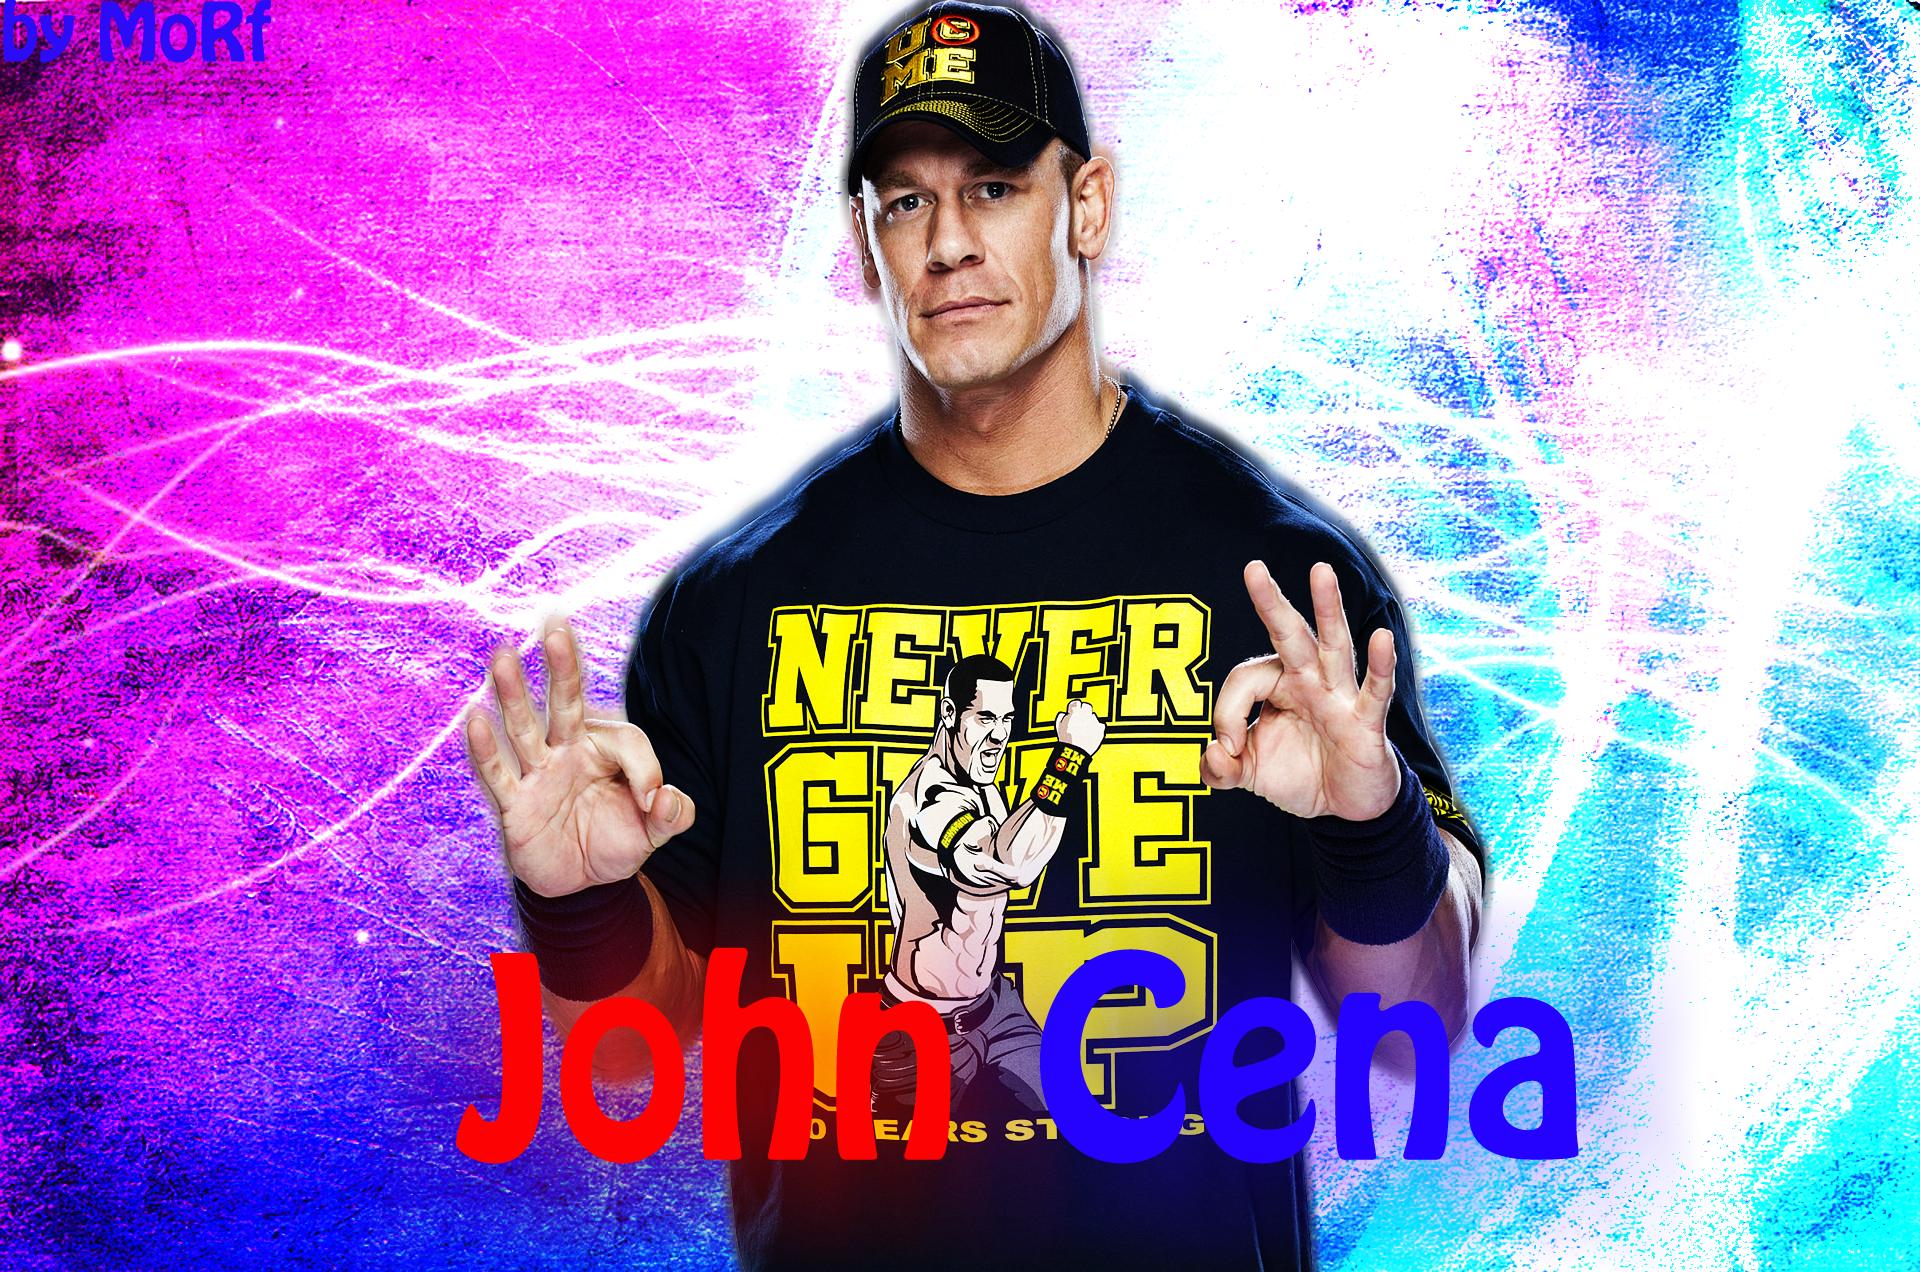 John Cena wallpapers - WWE Photo (33276573) - Fanpop